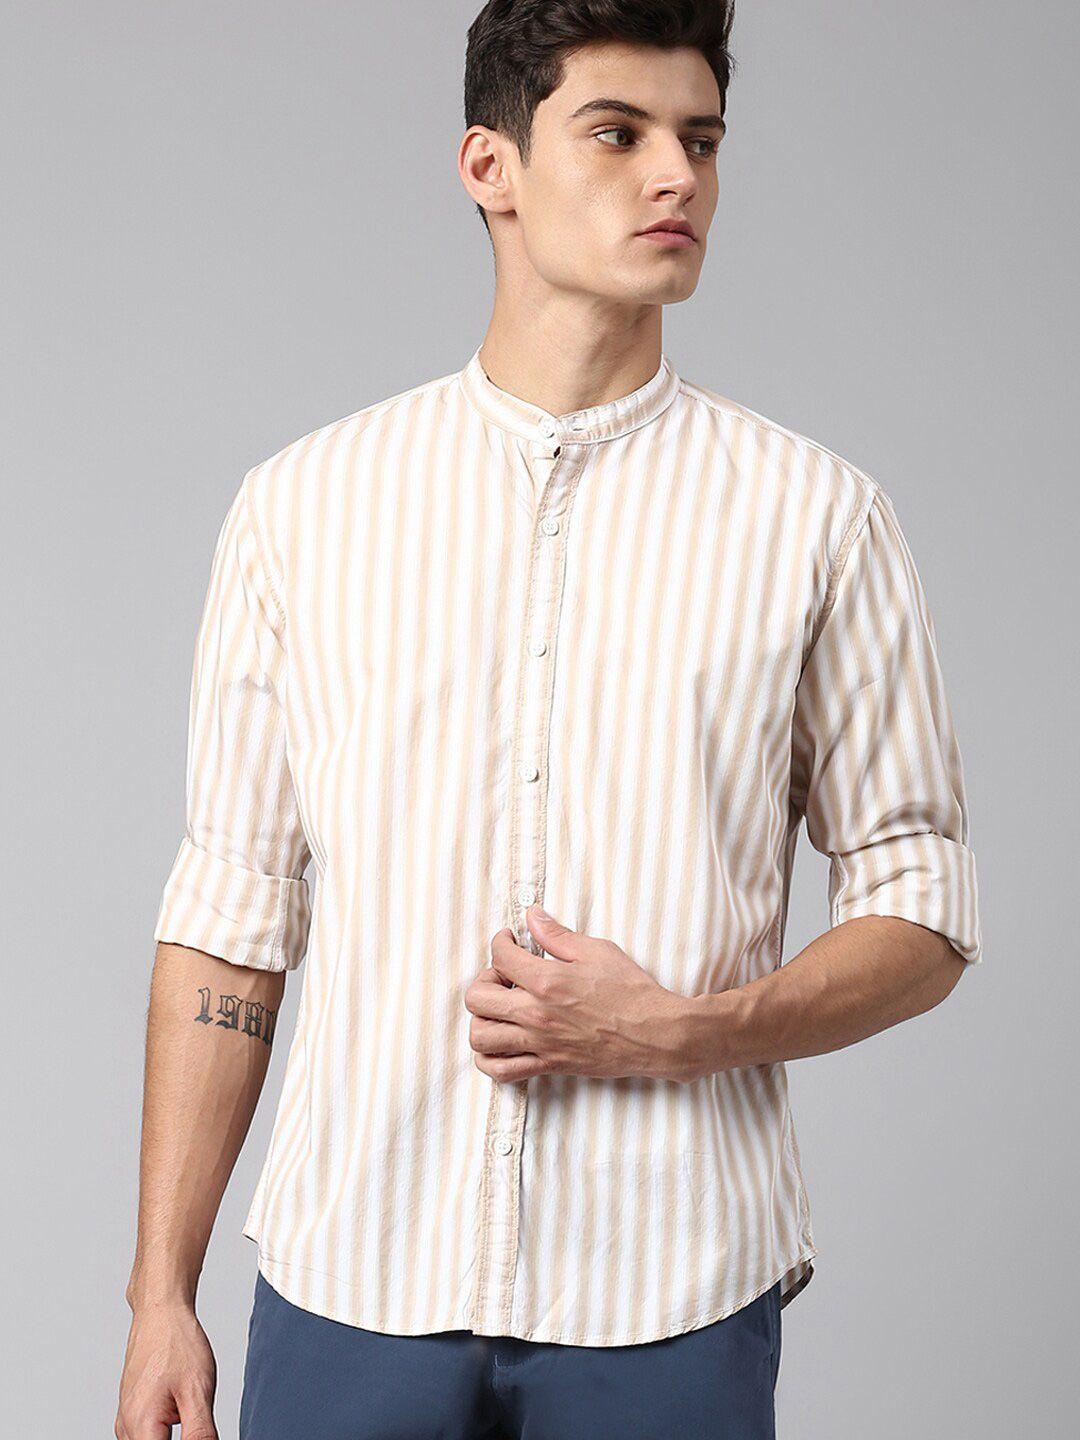 dennis lingo slim fit vertical stripes striped pure cotton casual shirt